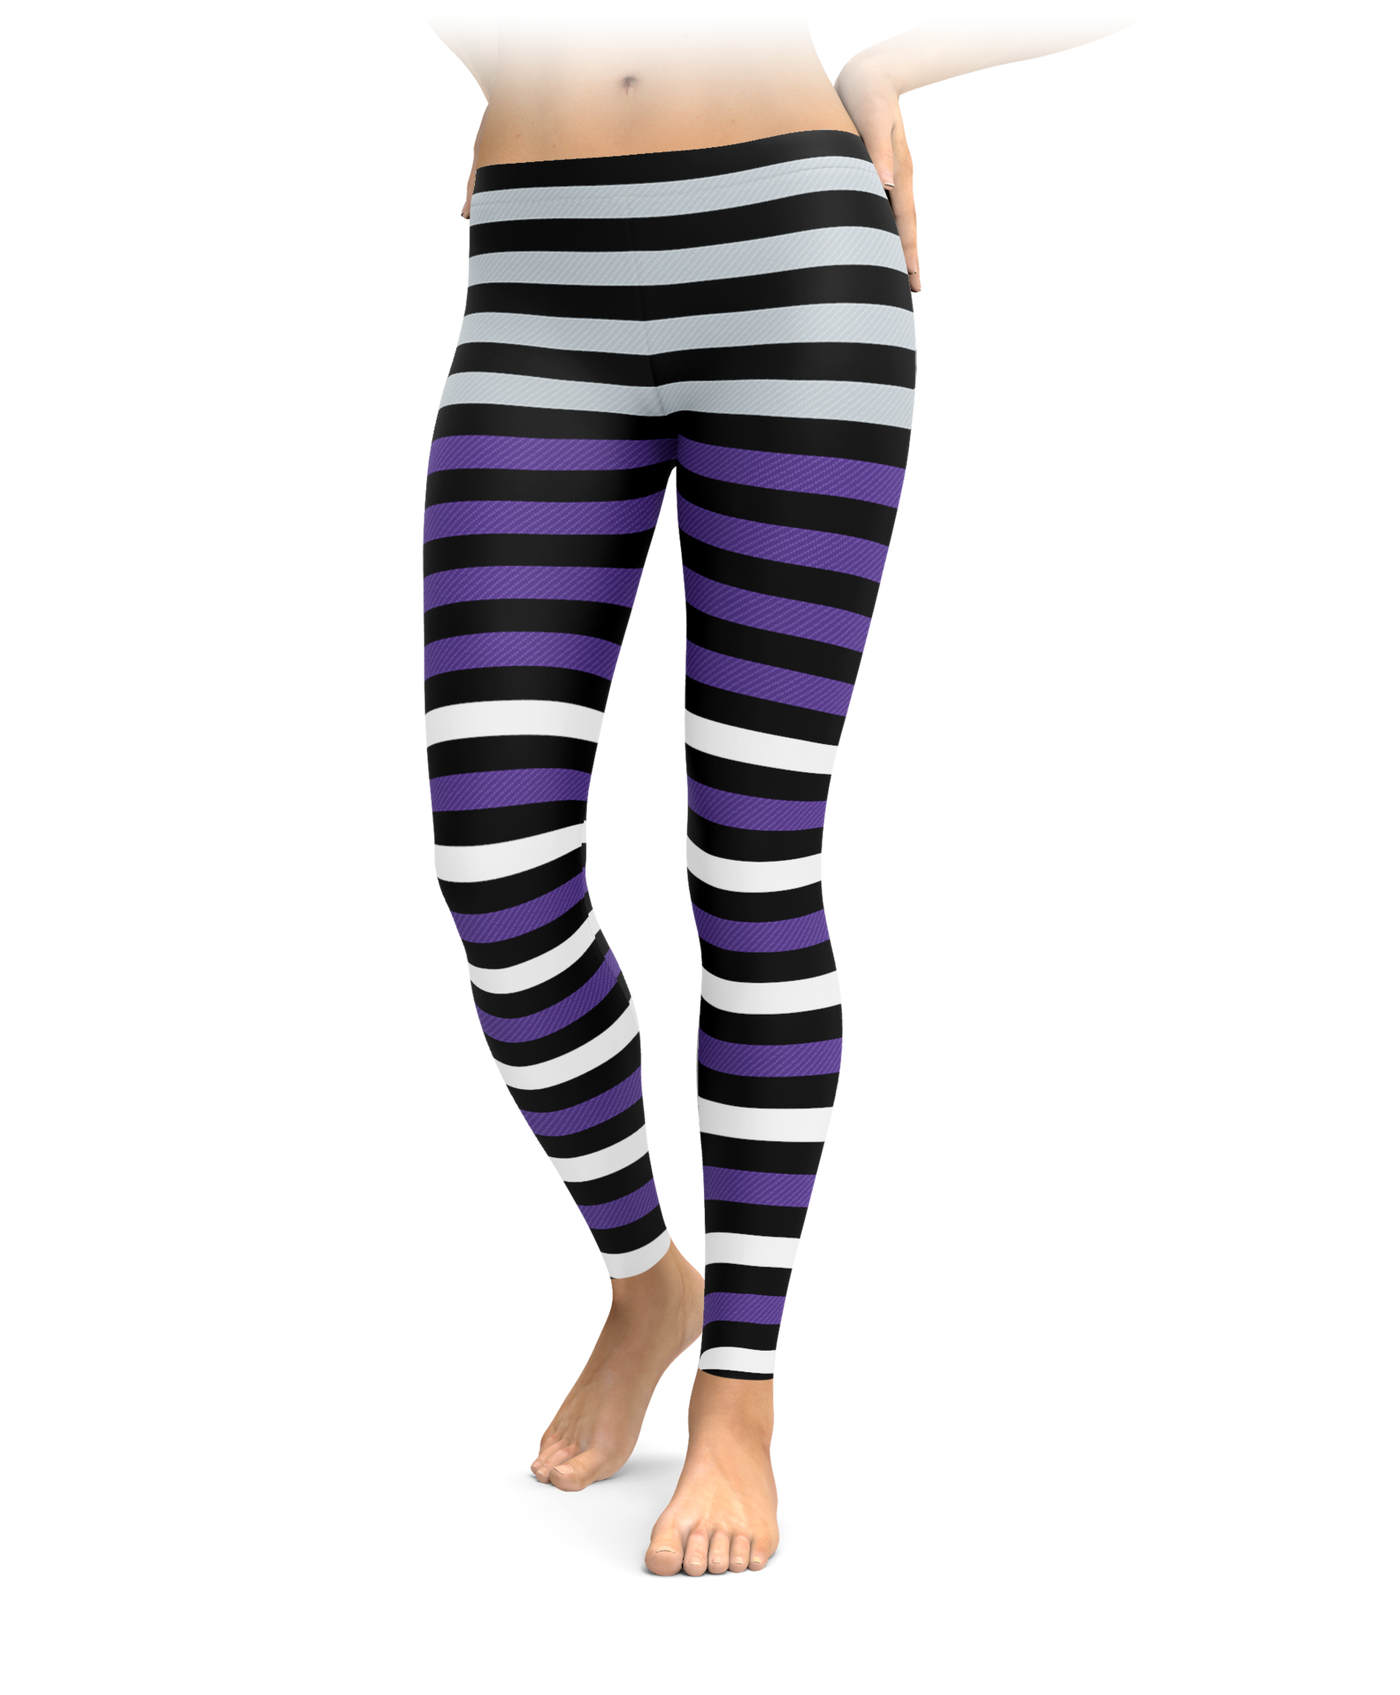 Black & Purple Striped Leggings